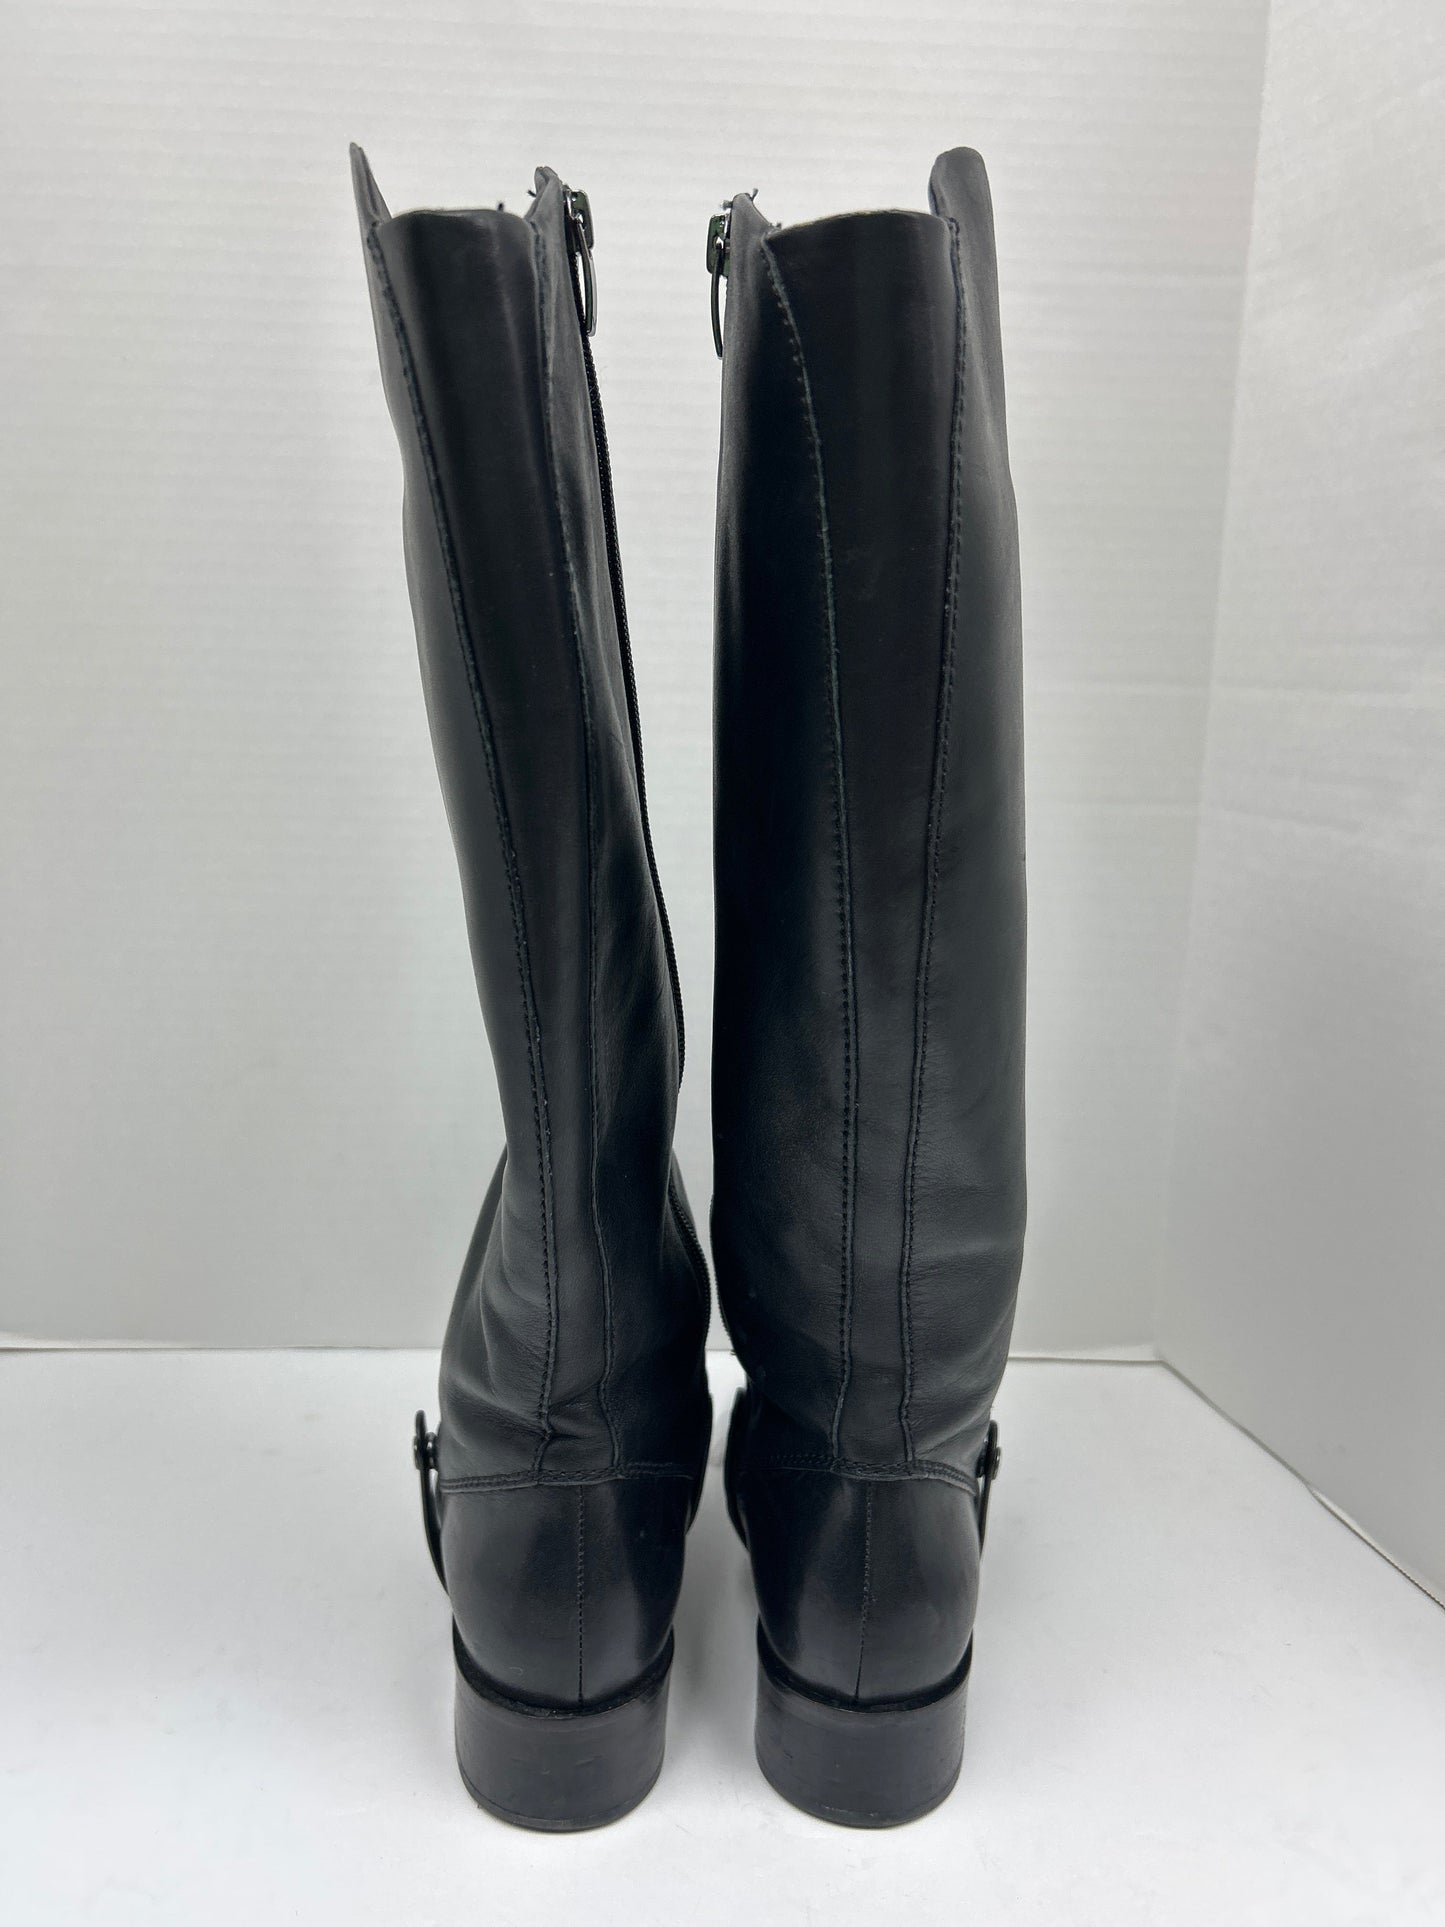 Boots Knee Flats By Via Spiga  Size: 7